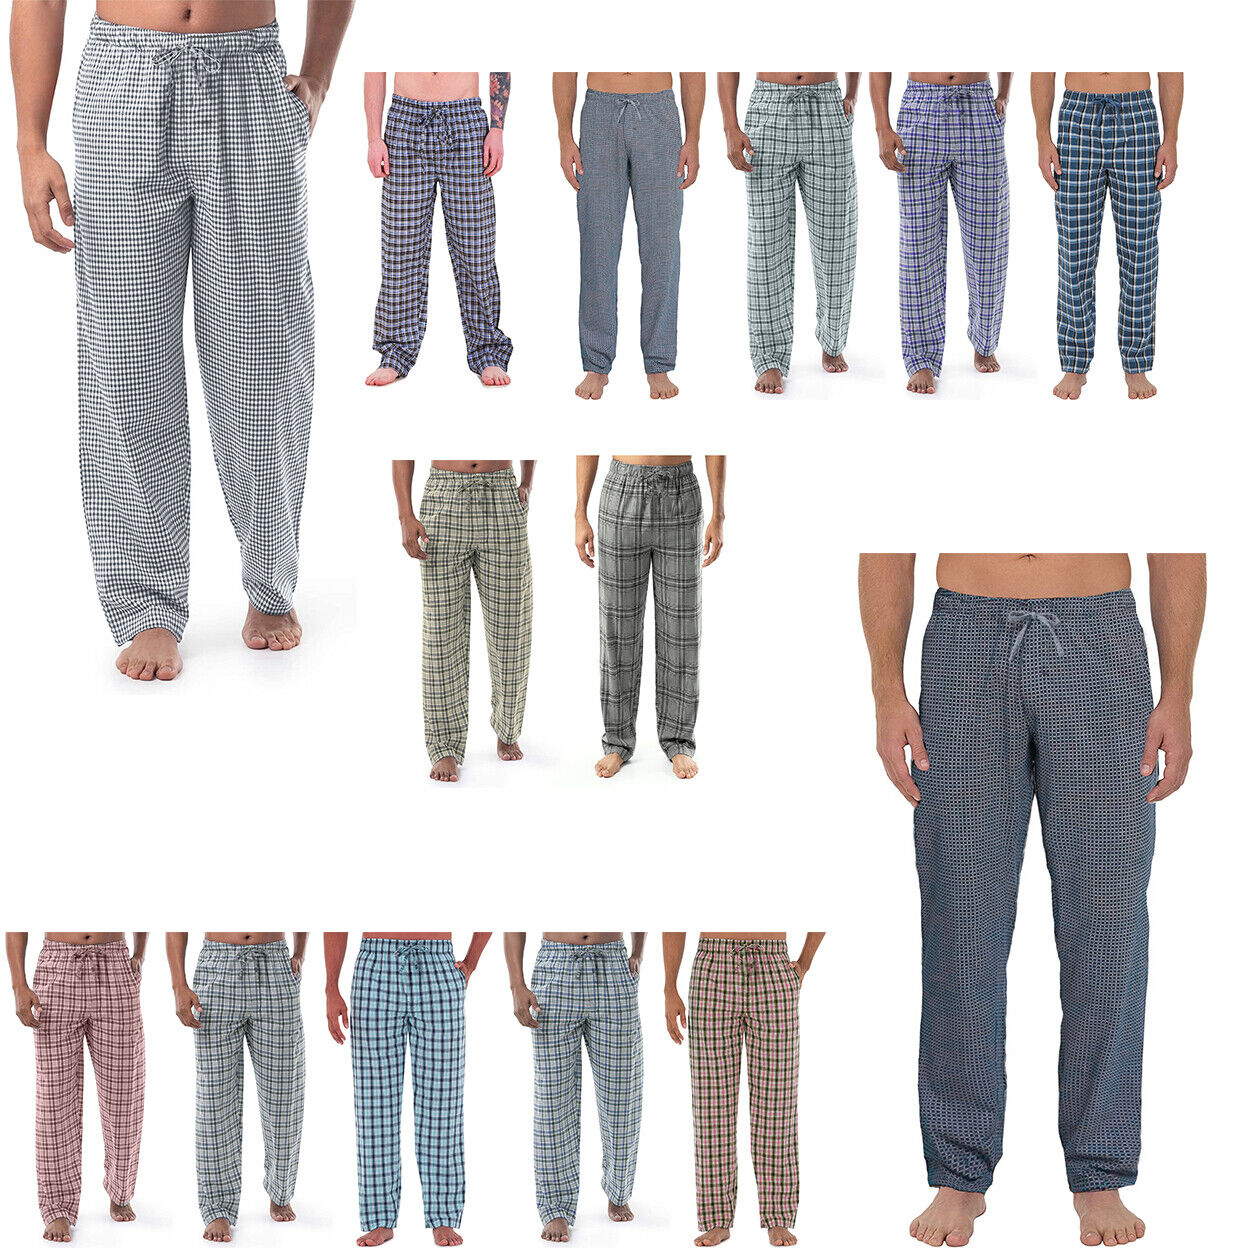 5-Pack: Men's Ultra-Soft Plaid Cotton Jersey Knit Comfy Sleep Lounge Pajama Pants - Large